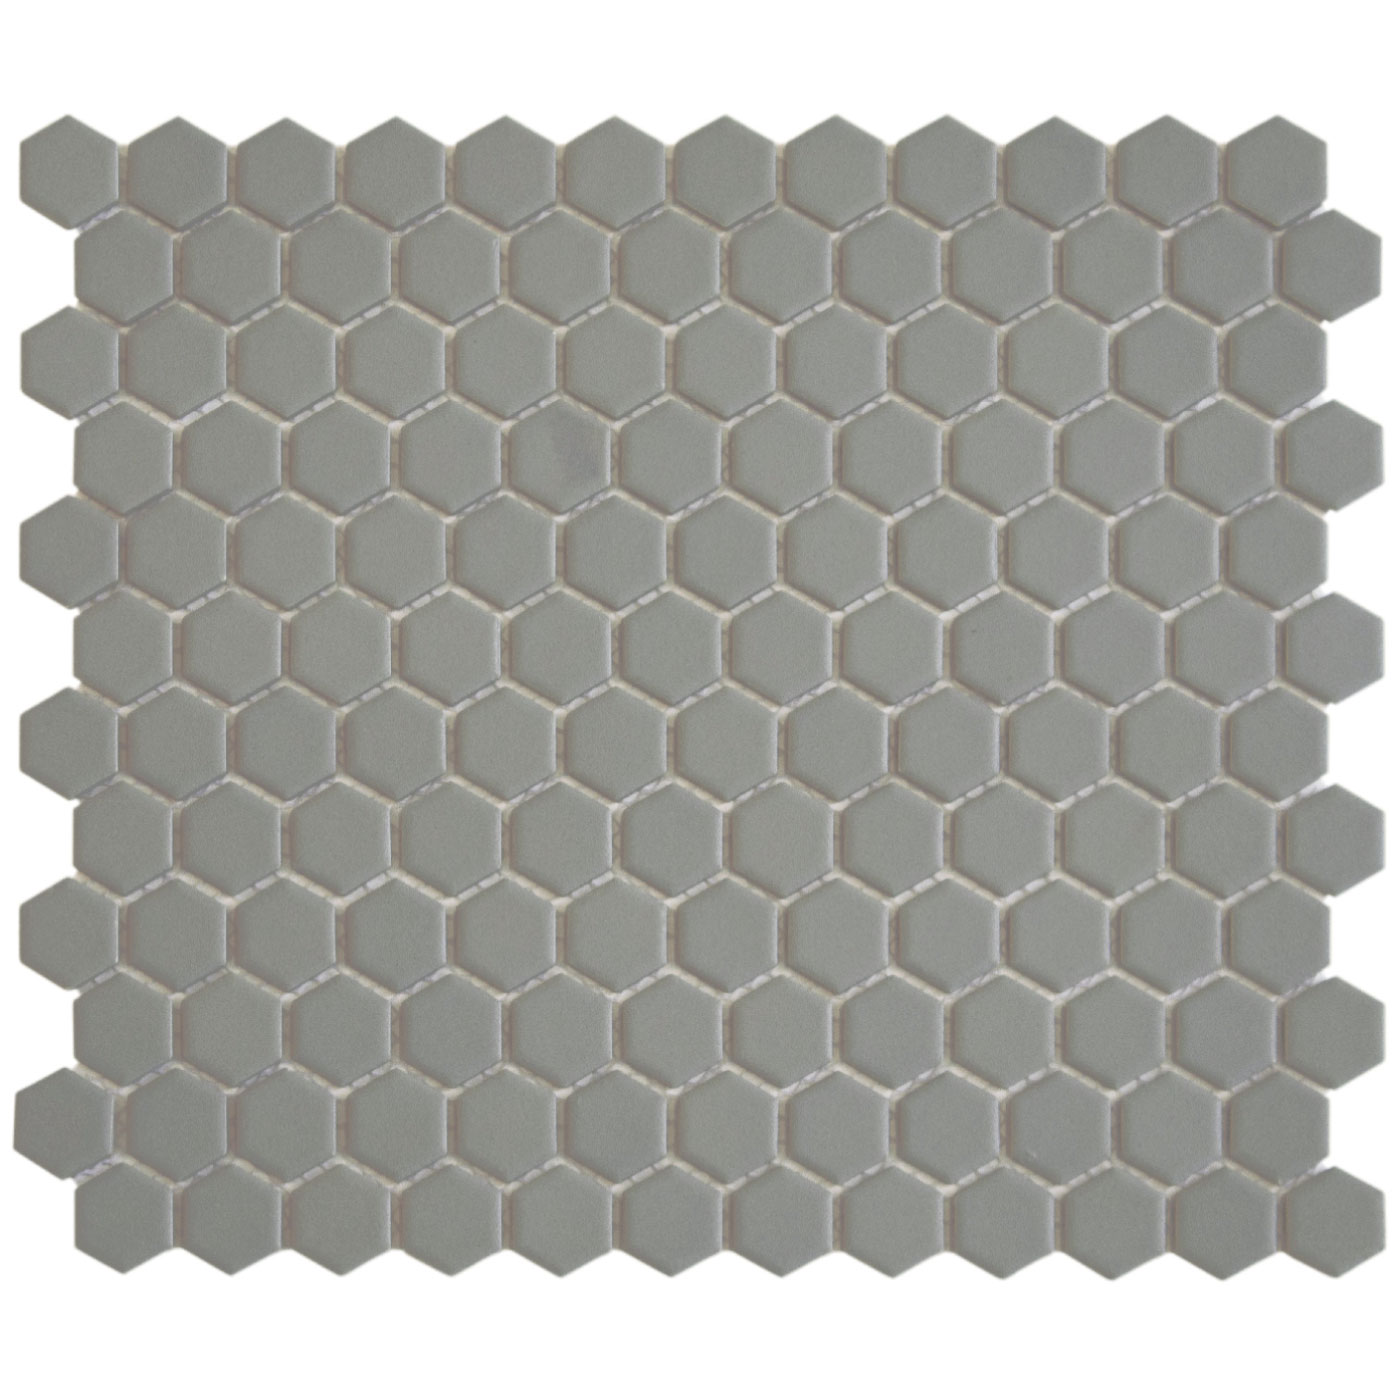 The Mosaic Factory Tegelsample:  Hexagon mozaïek tegels 23x26cm urban nature mat